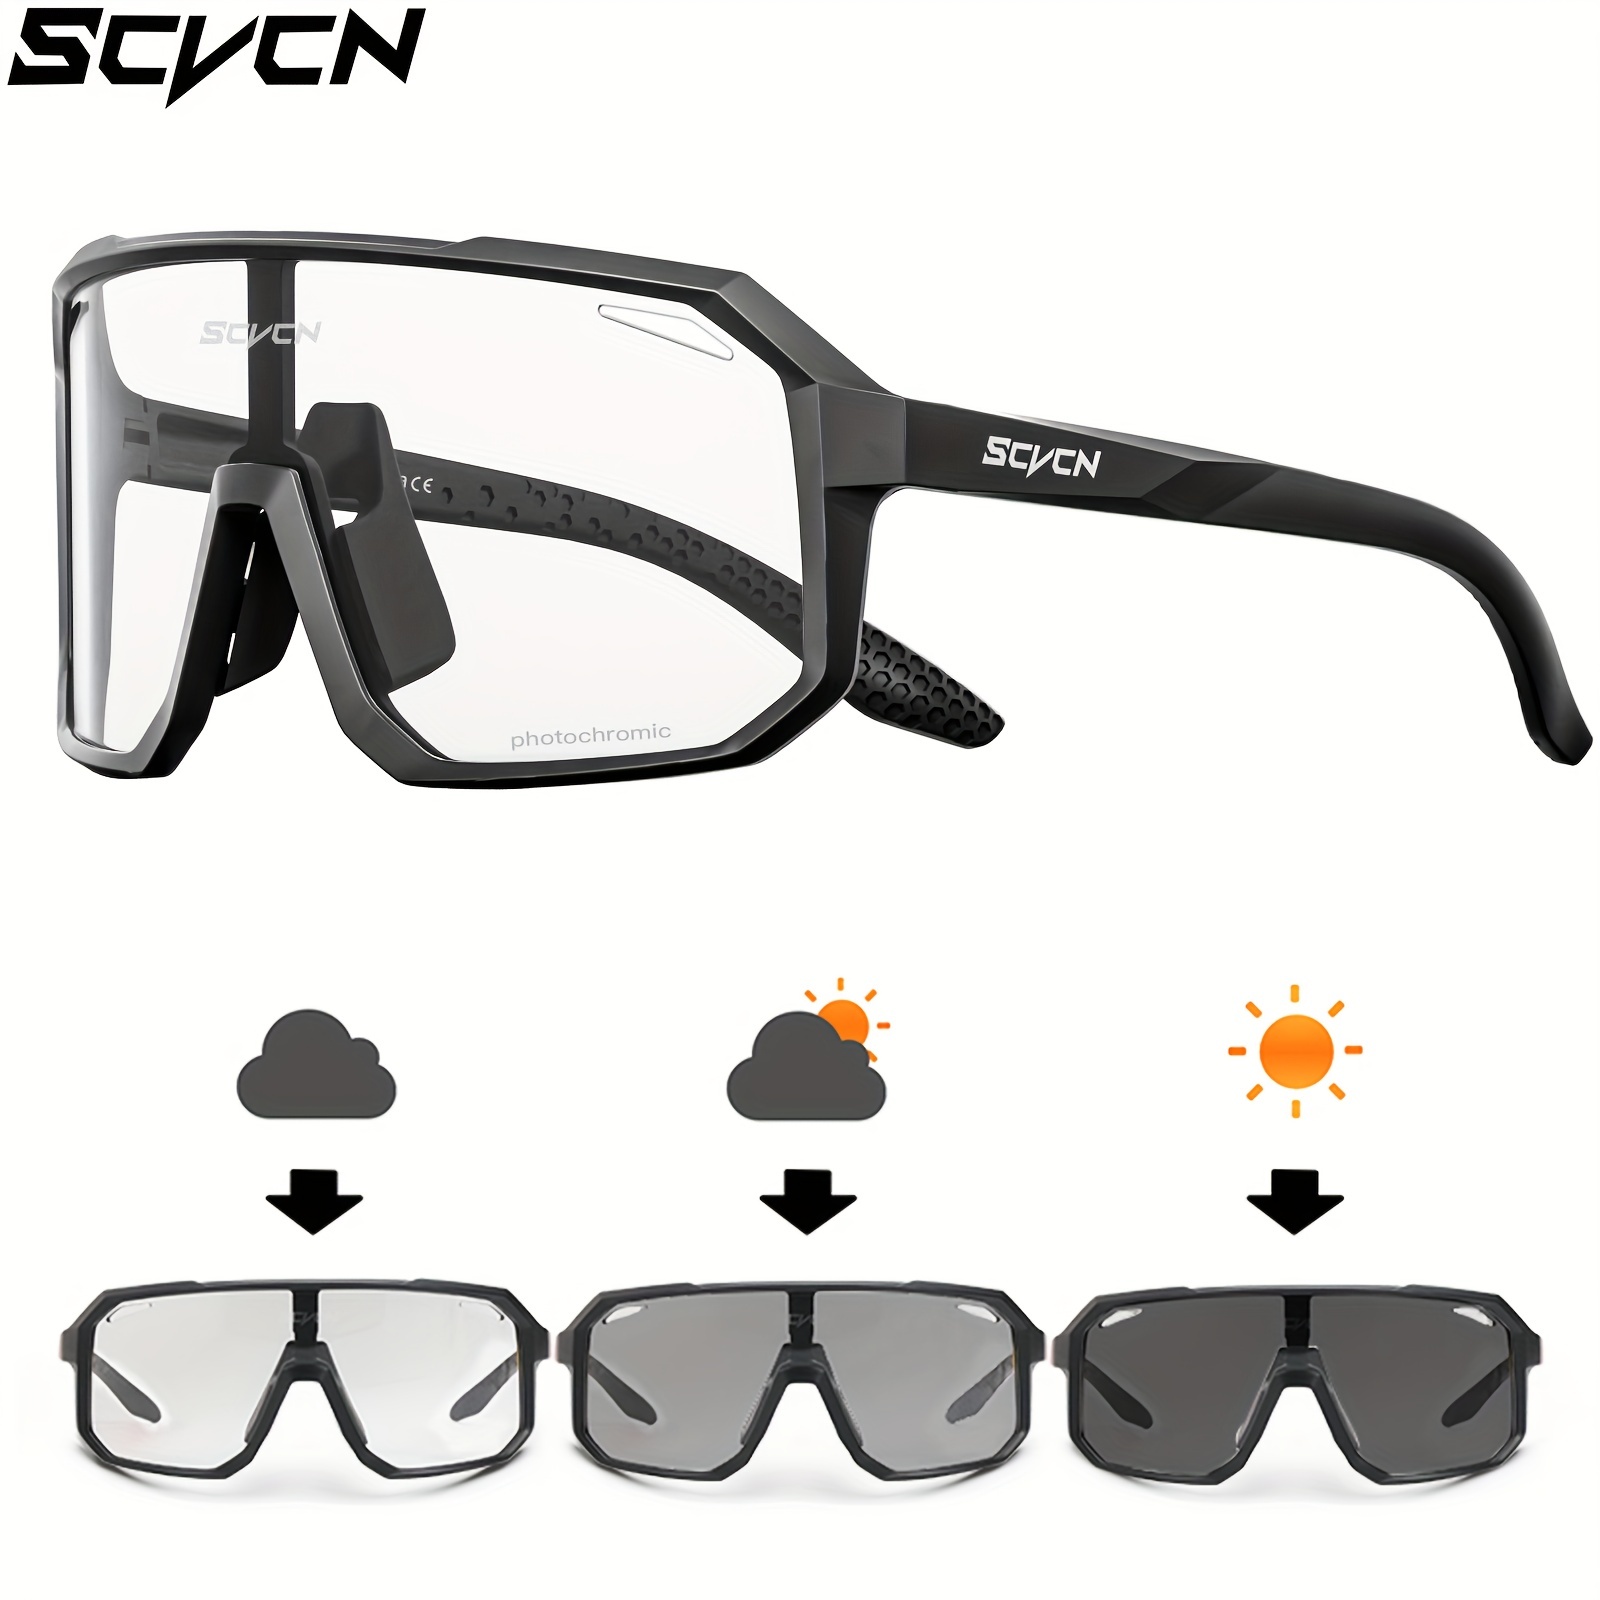 

Scvcn Cycling Glasses, Photochromic Sports Glasses, 1 Lens Classic Racing Bicycle Glasses, Riding Driving Fishing Running Golf Beach Glasses